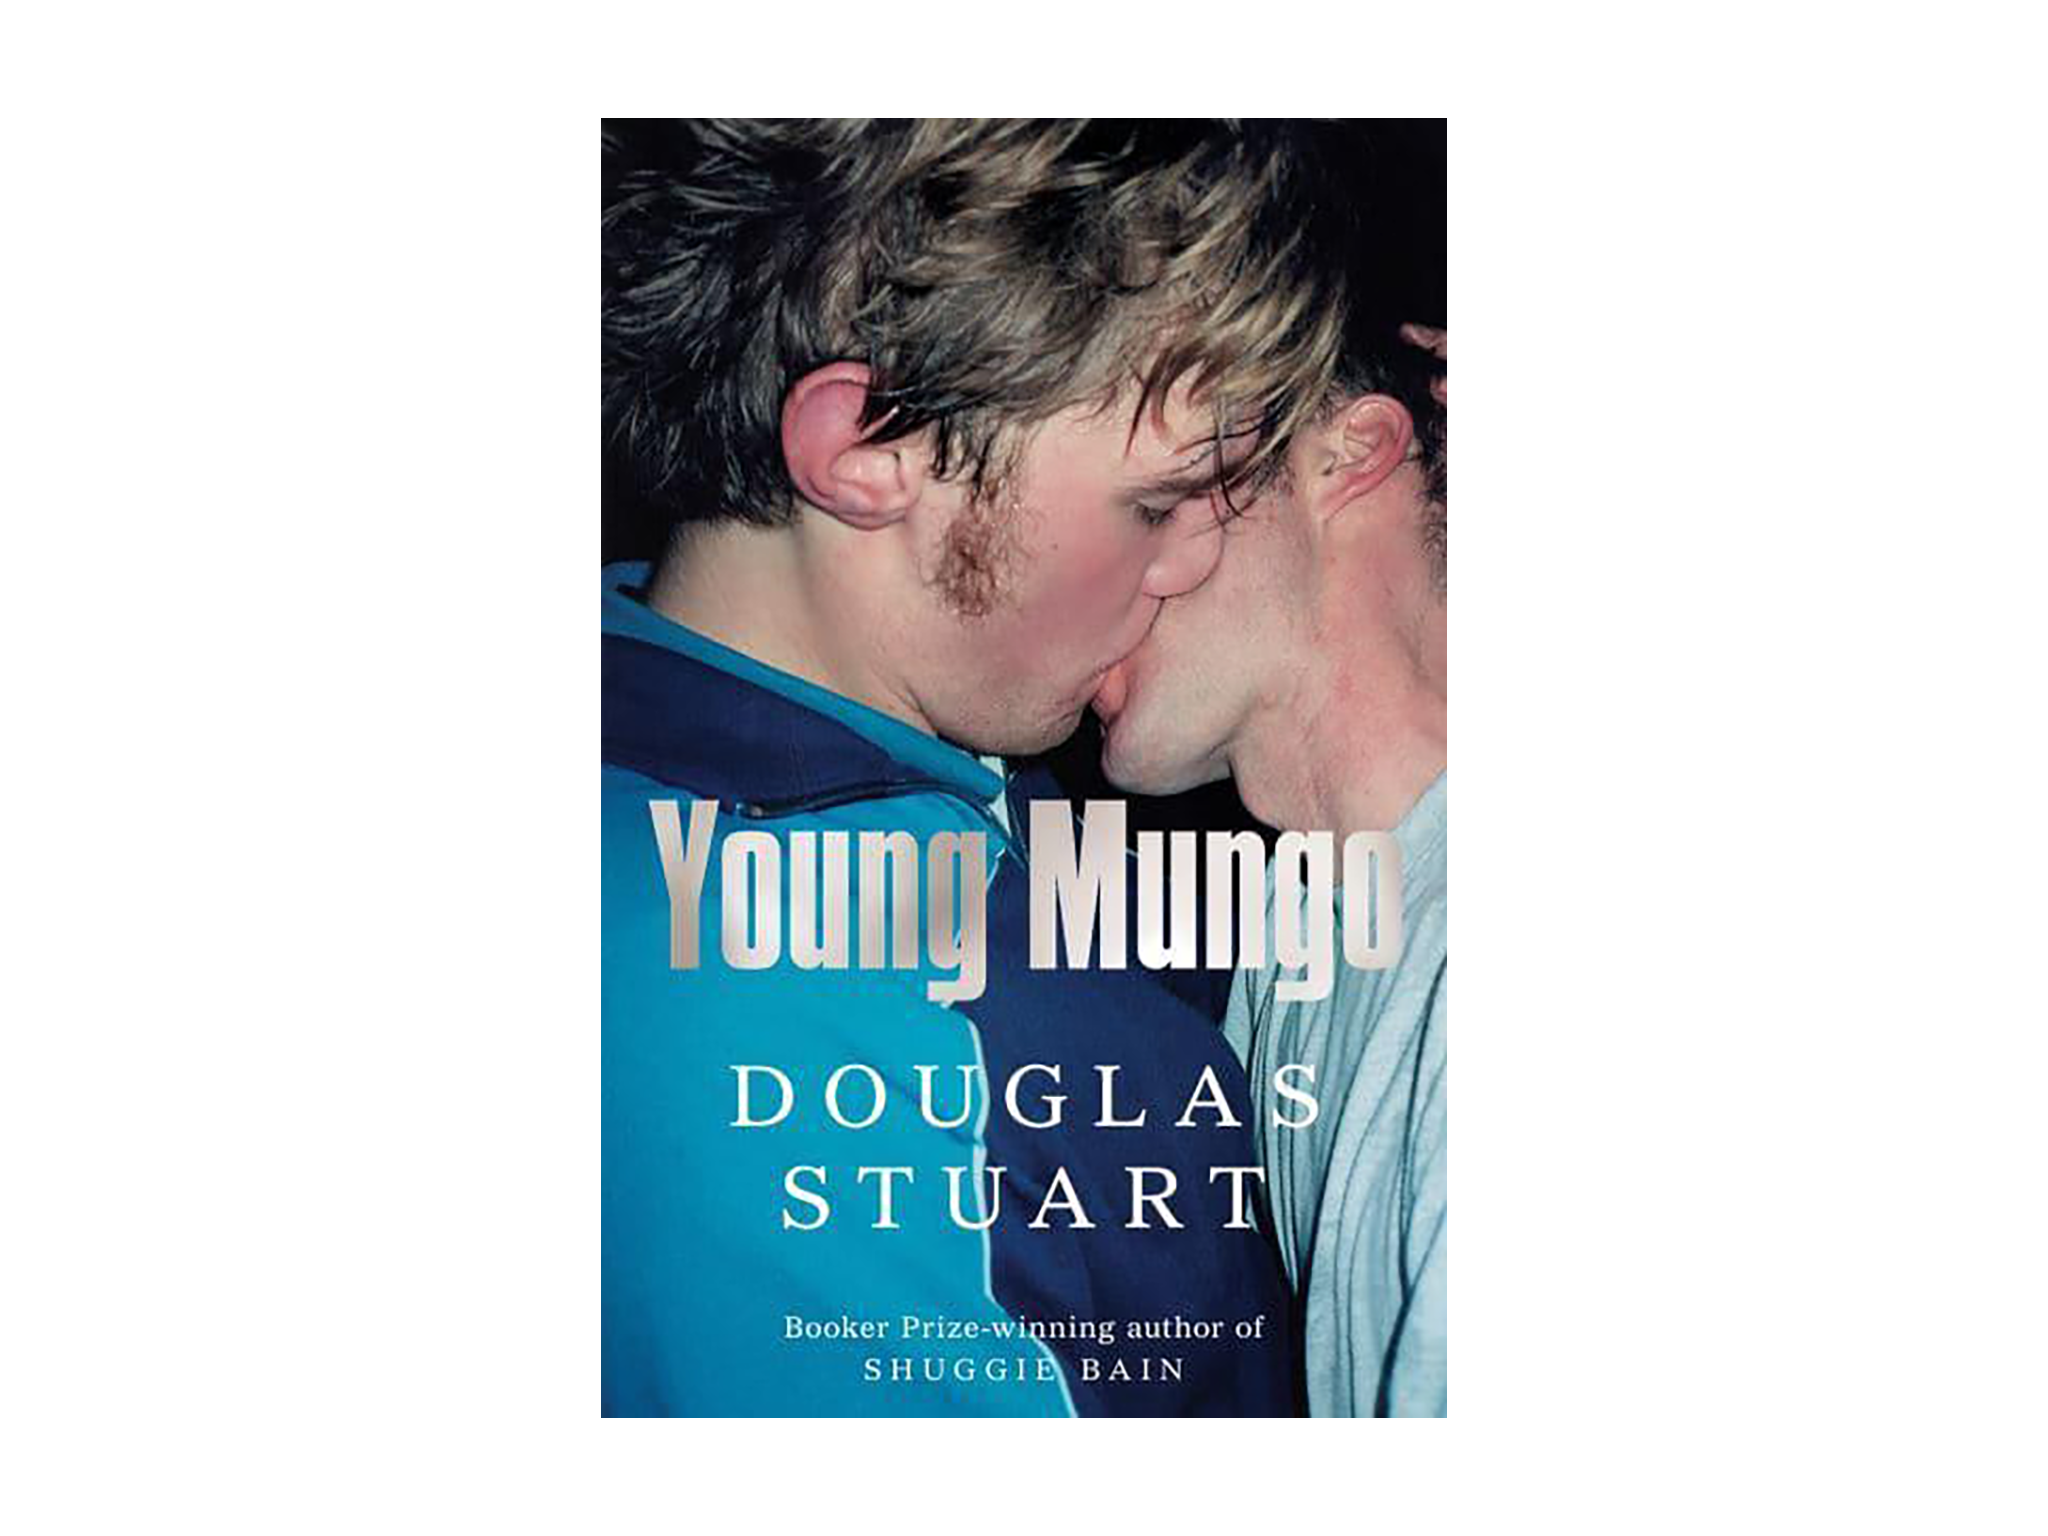 'Young Mungo’ by Douglas Stuart, published by Macmillan.png